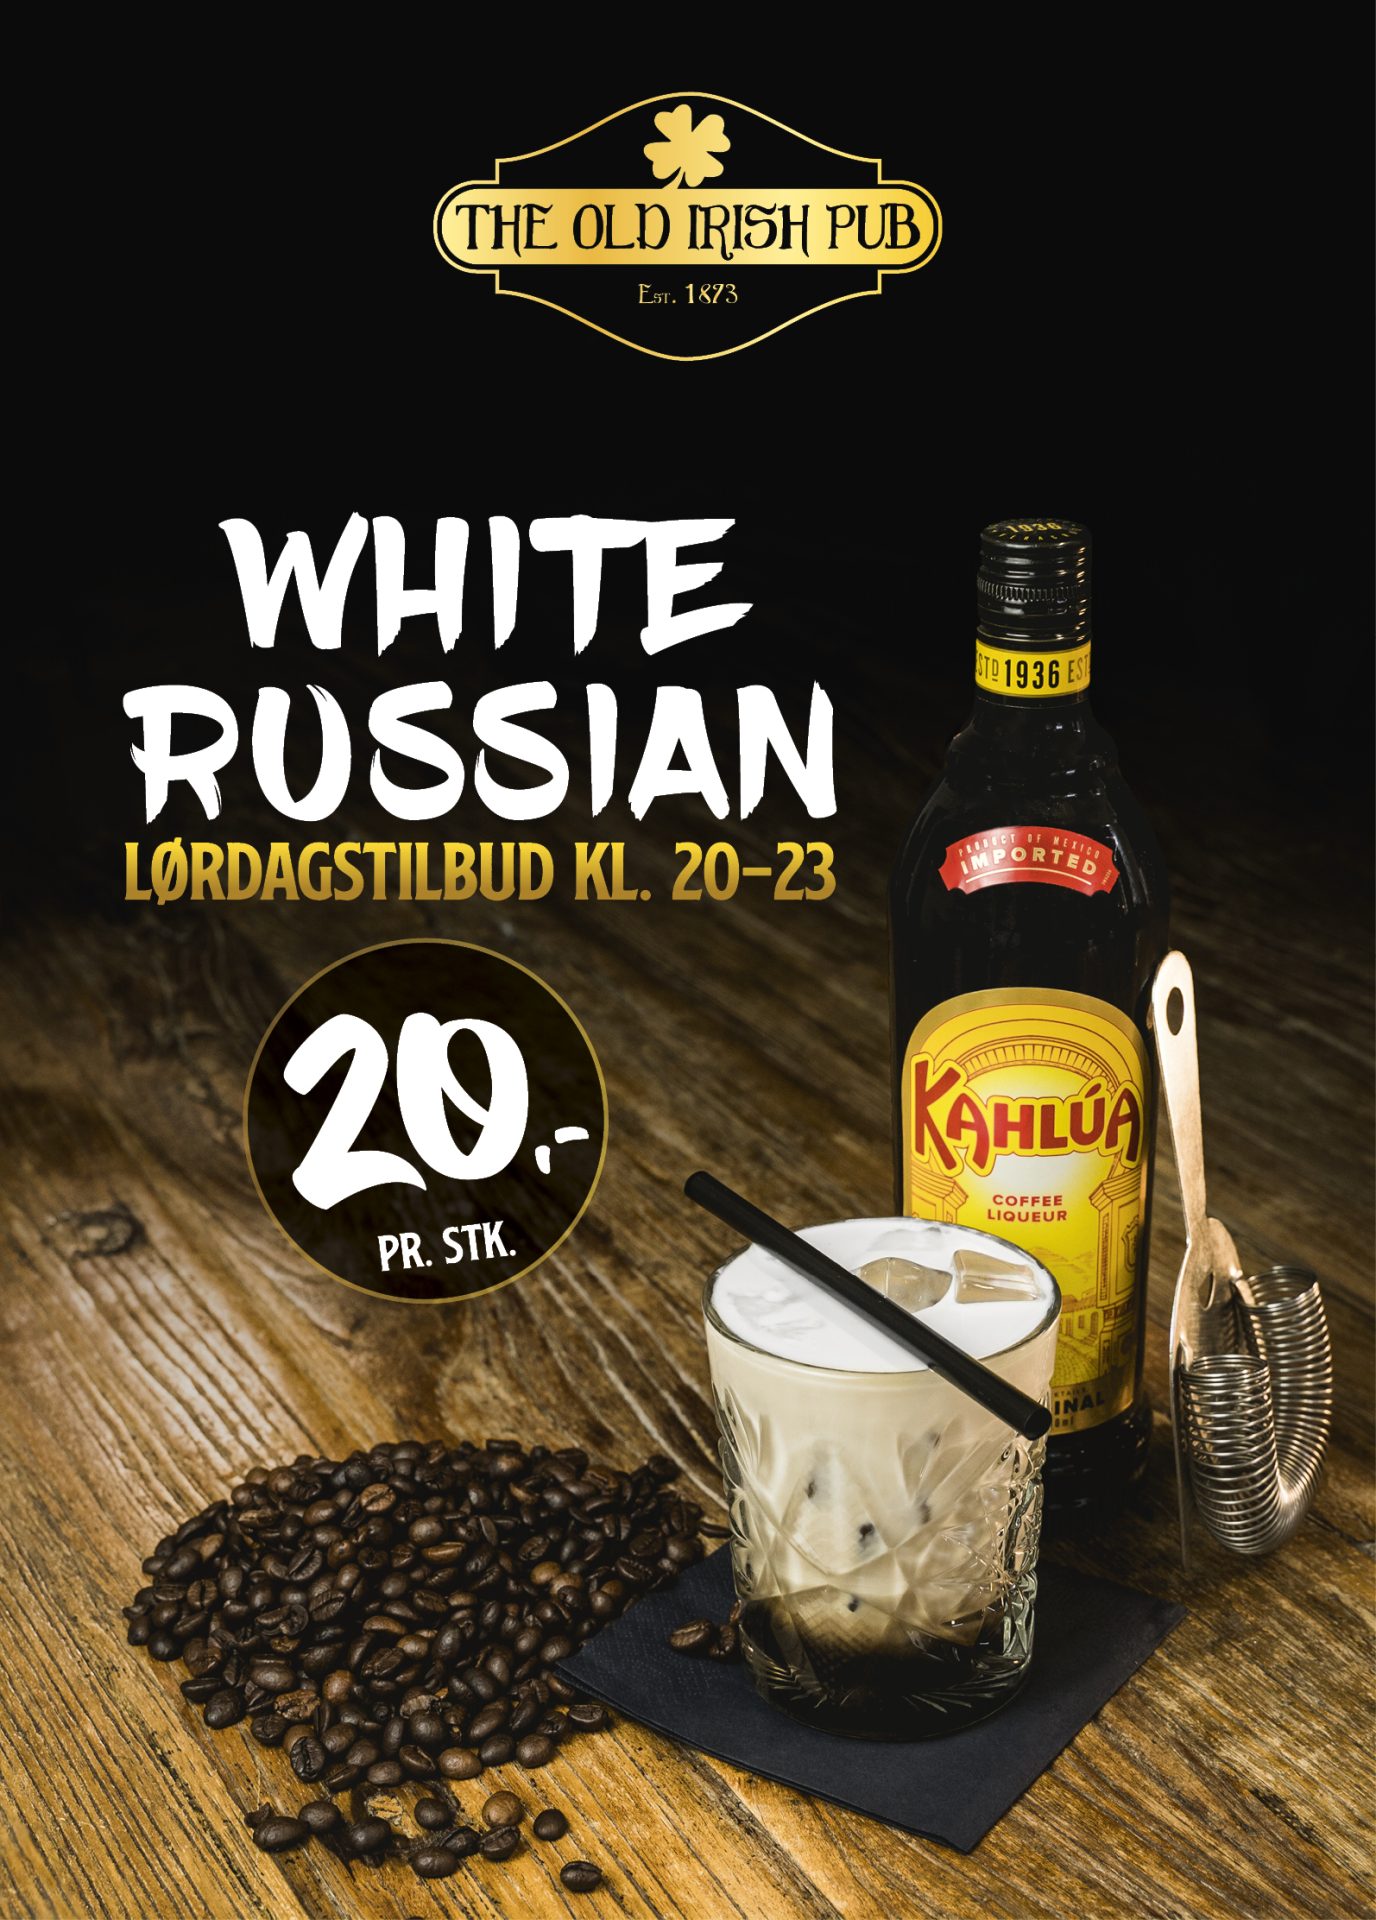 White Russian Kampagne Old irish pub!